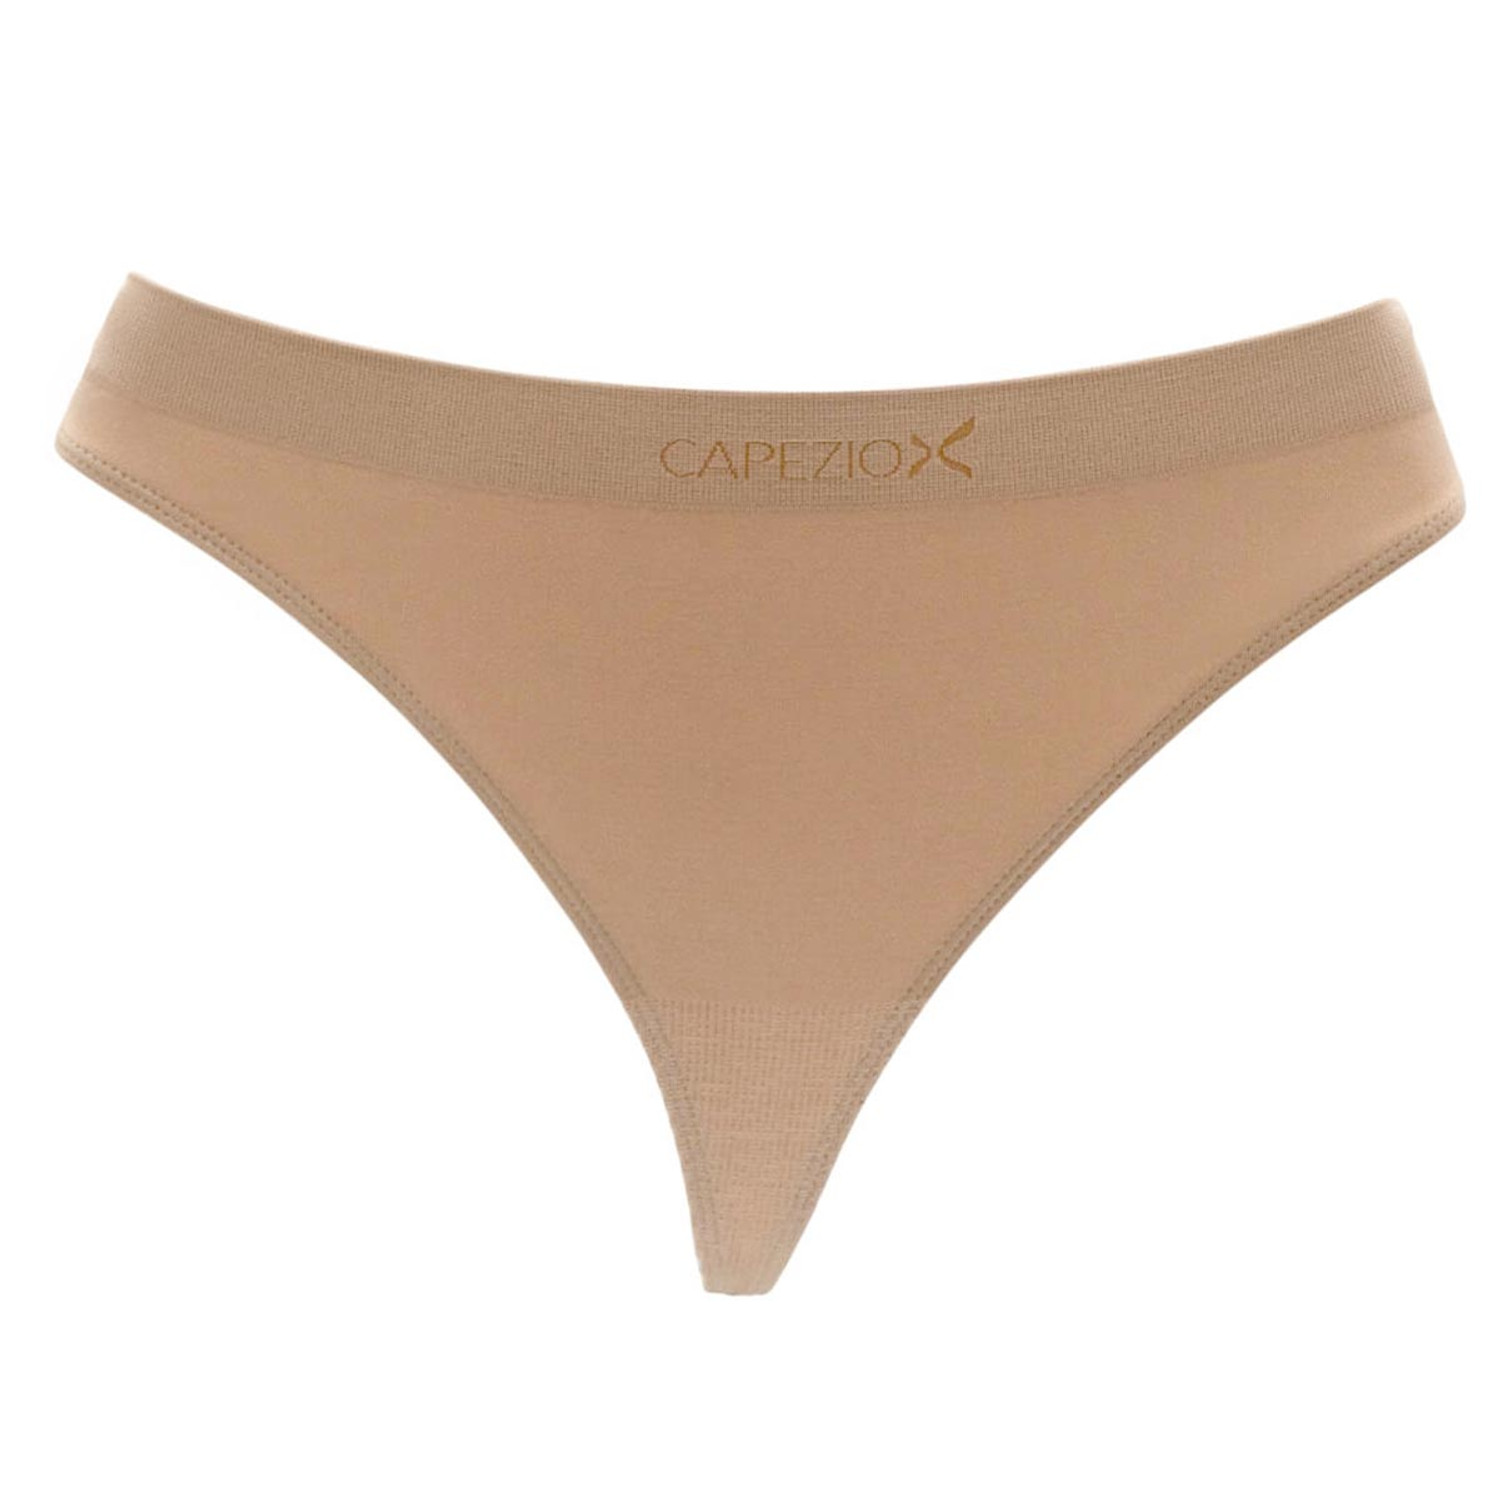 Capezio Classic Stretch Dance Underwear Brief Ladies Sizes